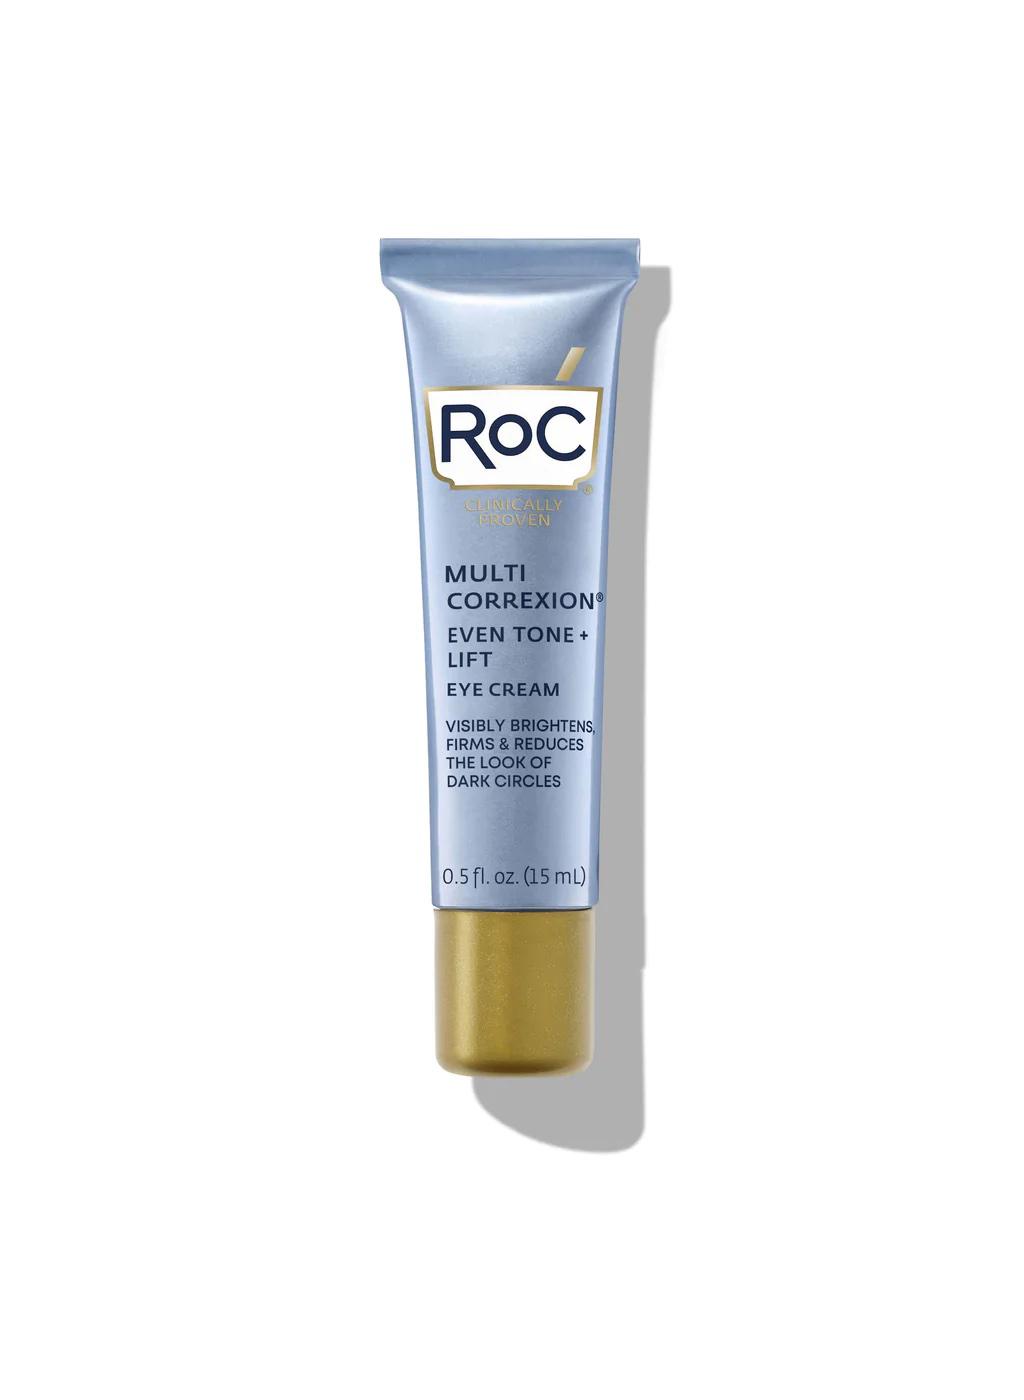 RoC Multi Correxion 5-in-1 Eye Cream; image 2 of 4